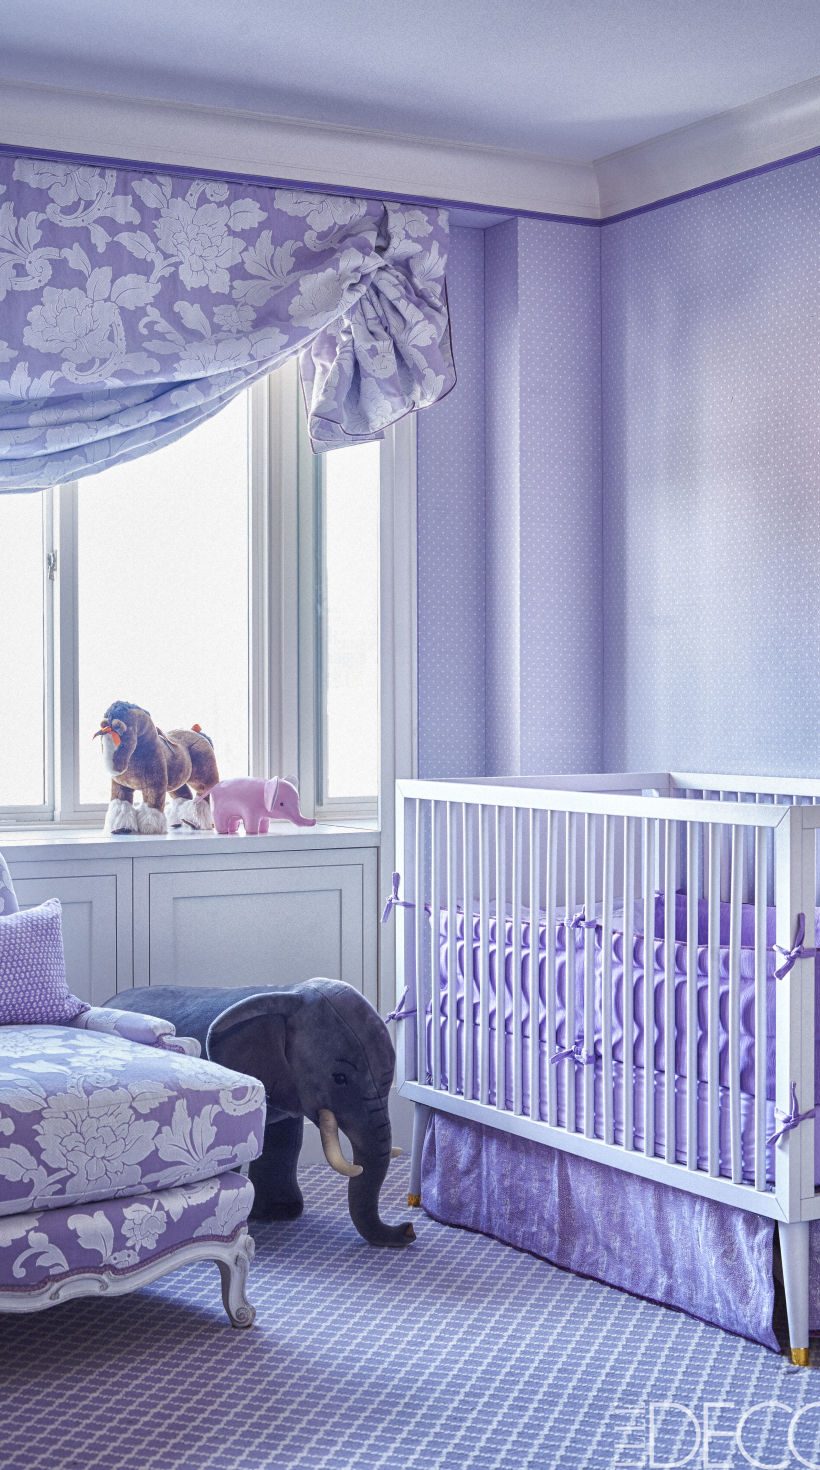 Interior Design: purple, blue, patterns and textures by Alex Papachristidis